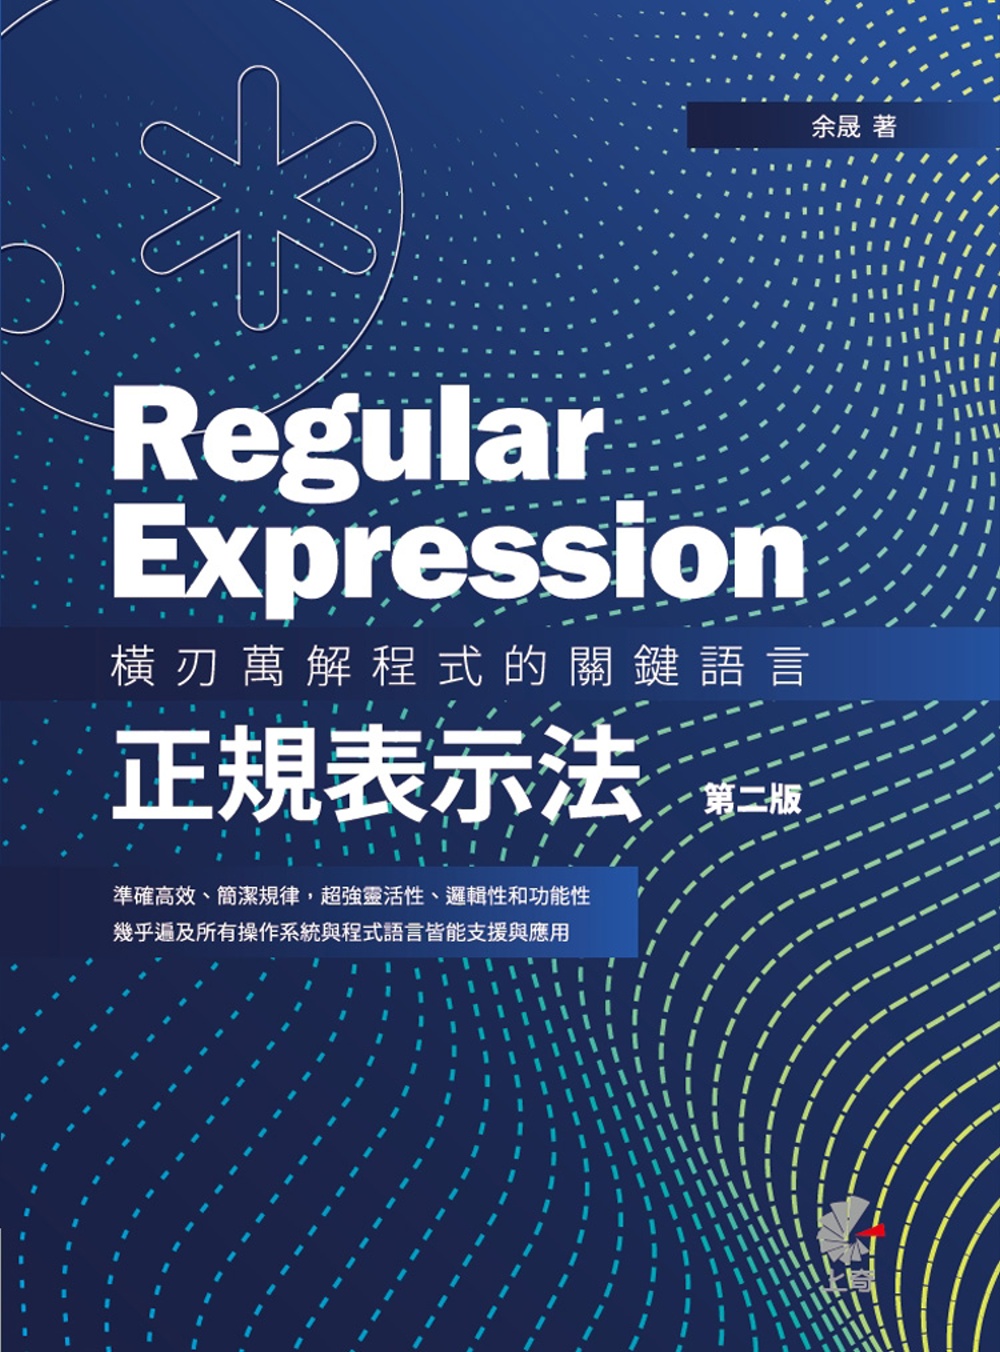 Regular Expression：橫刃萬解程式的關鍵語言...